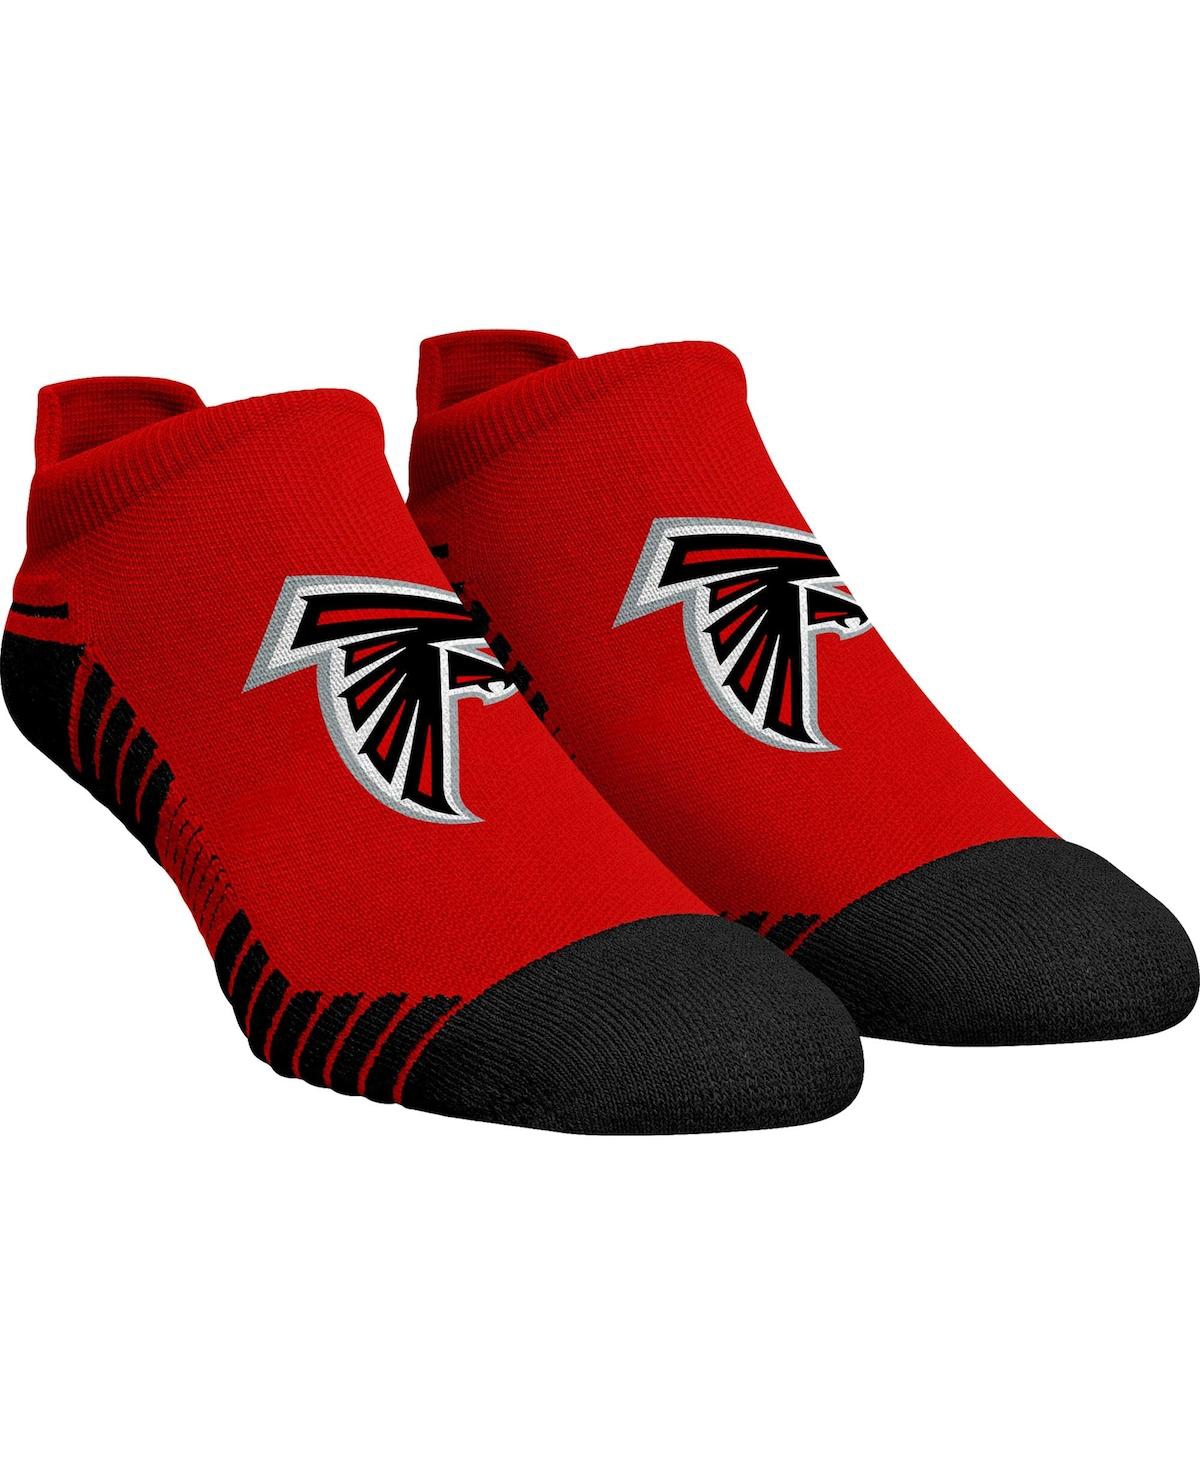 Men's and Women's Rock 'Em Socks Atlanta Falcons Hex Ankle Socks - Red